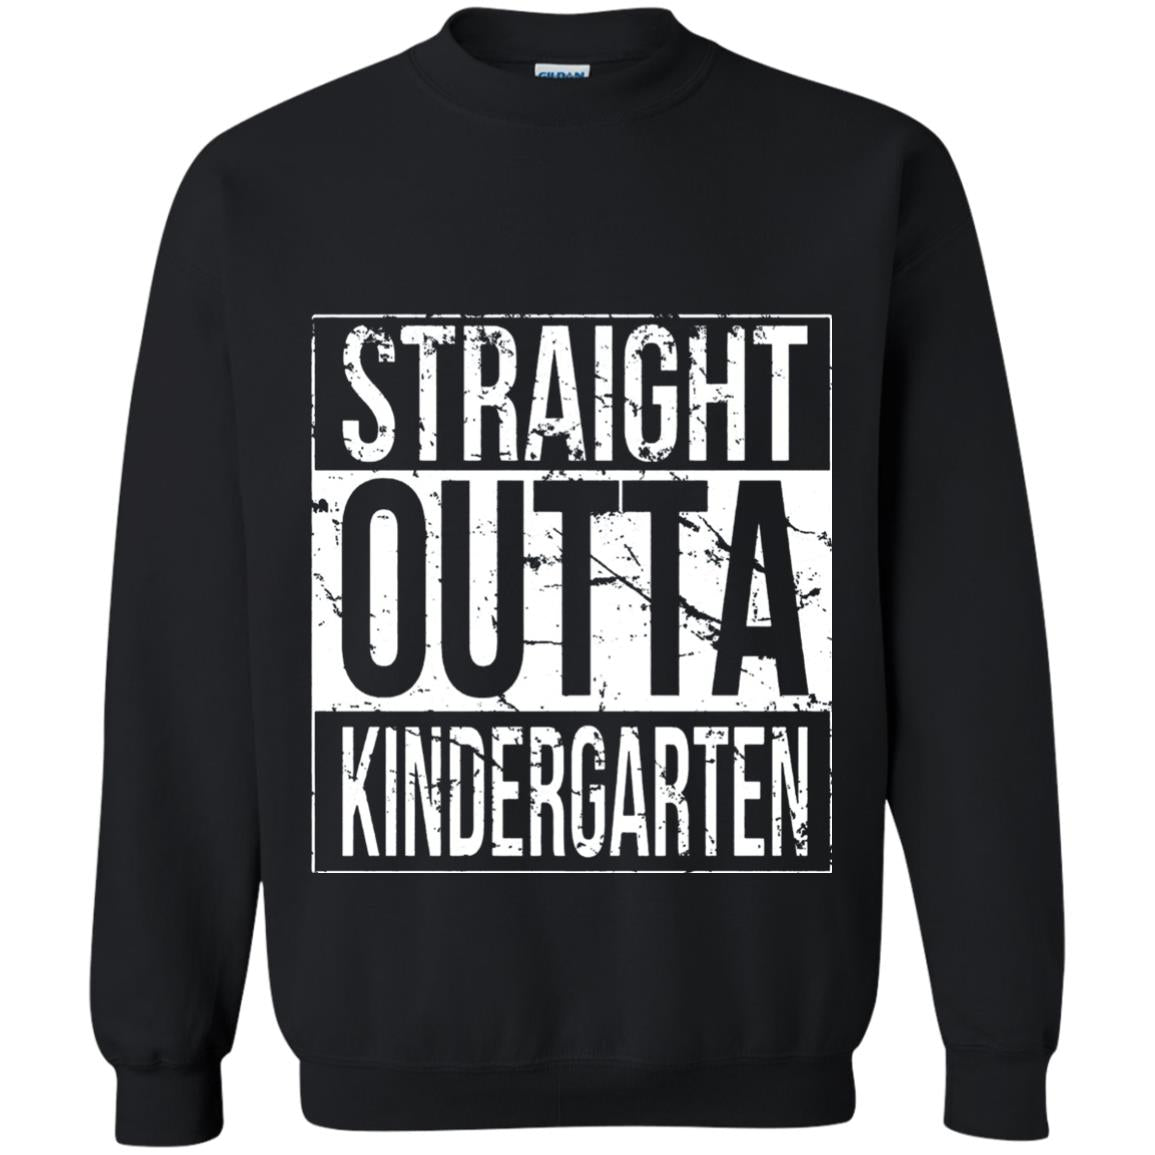 Kids Straight Outta Kindergarten T-shirt